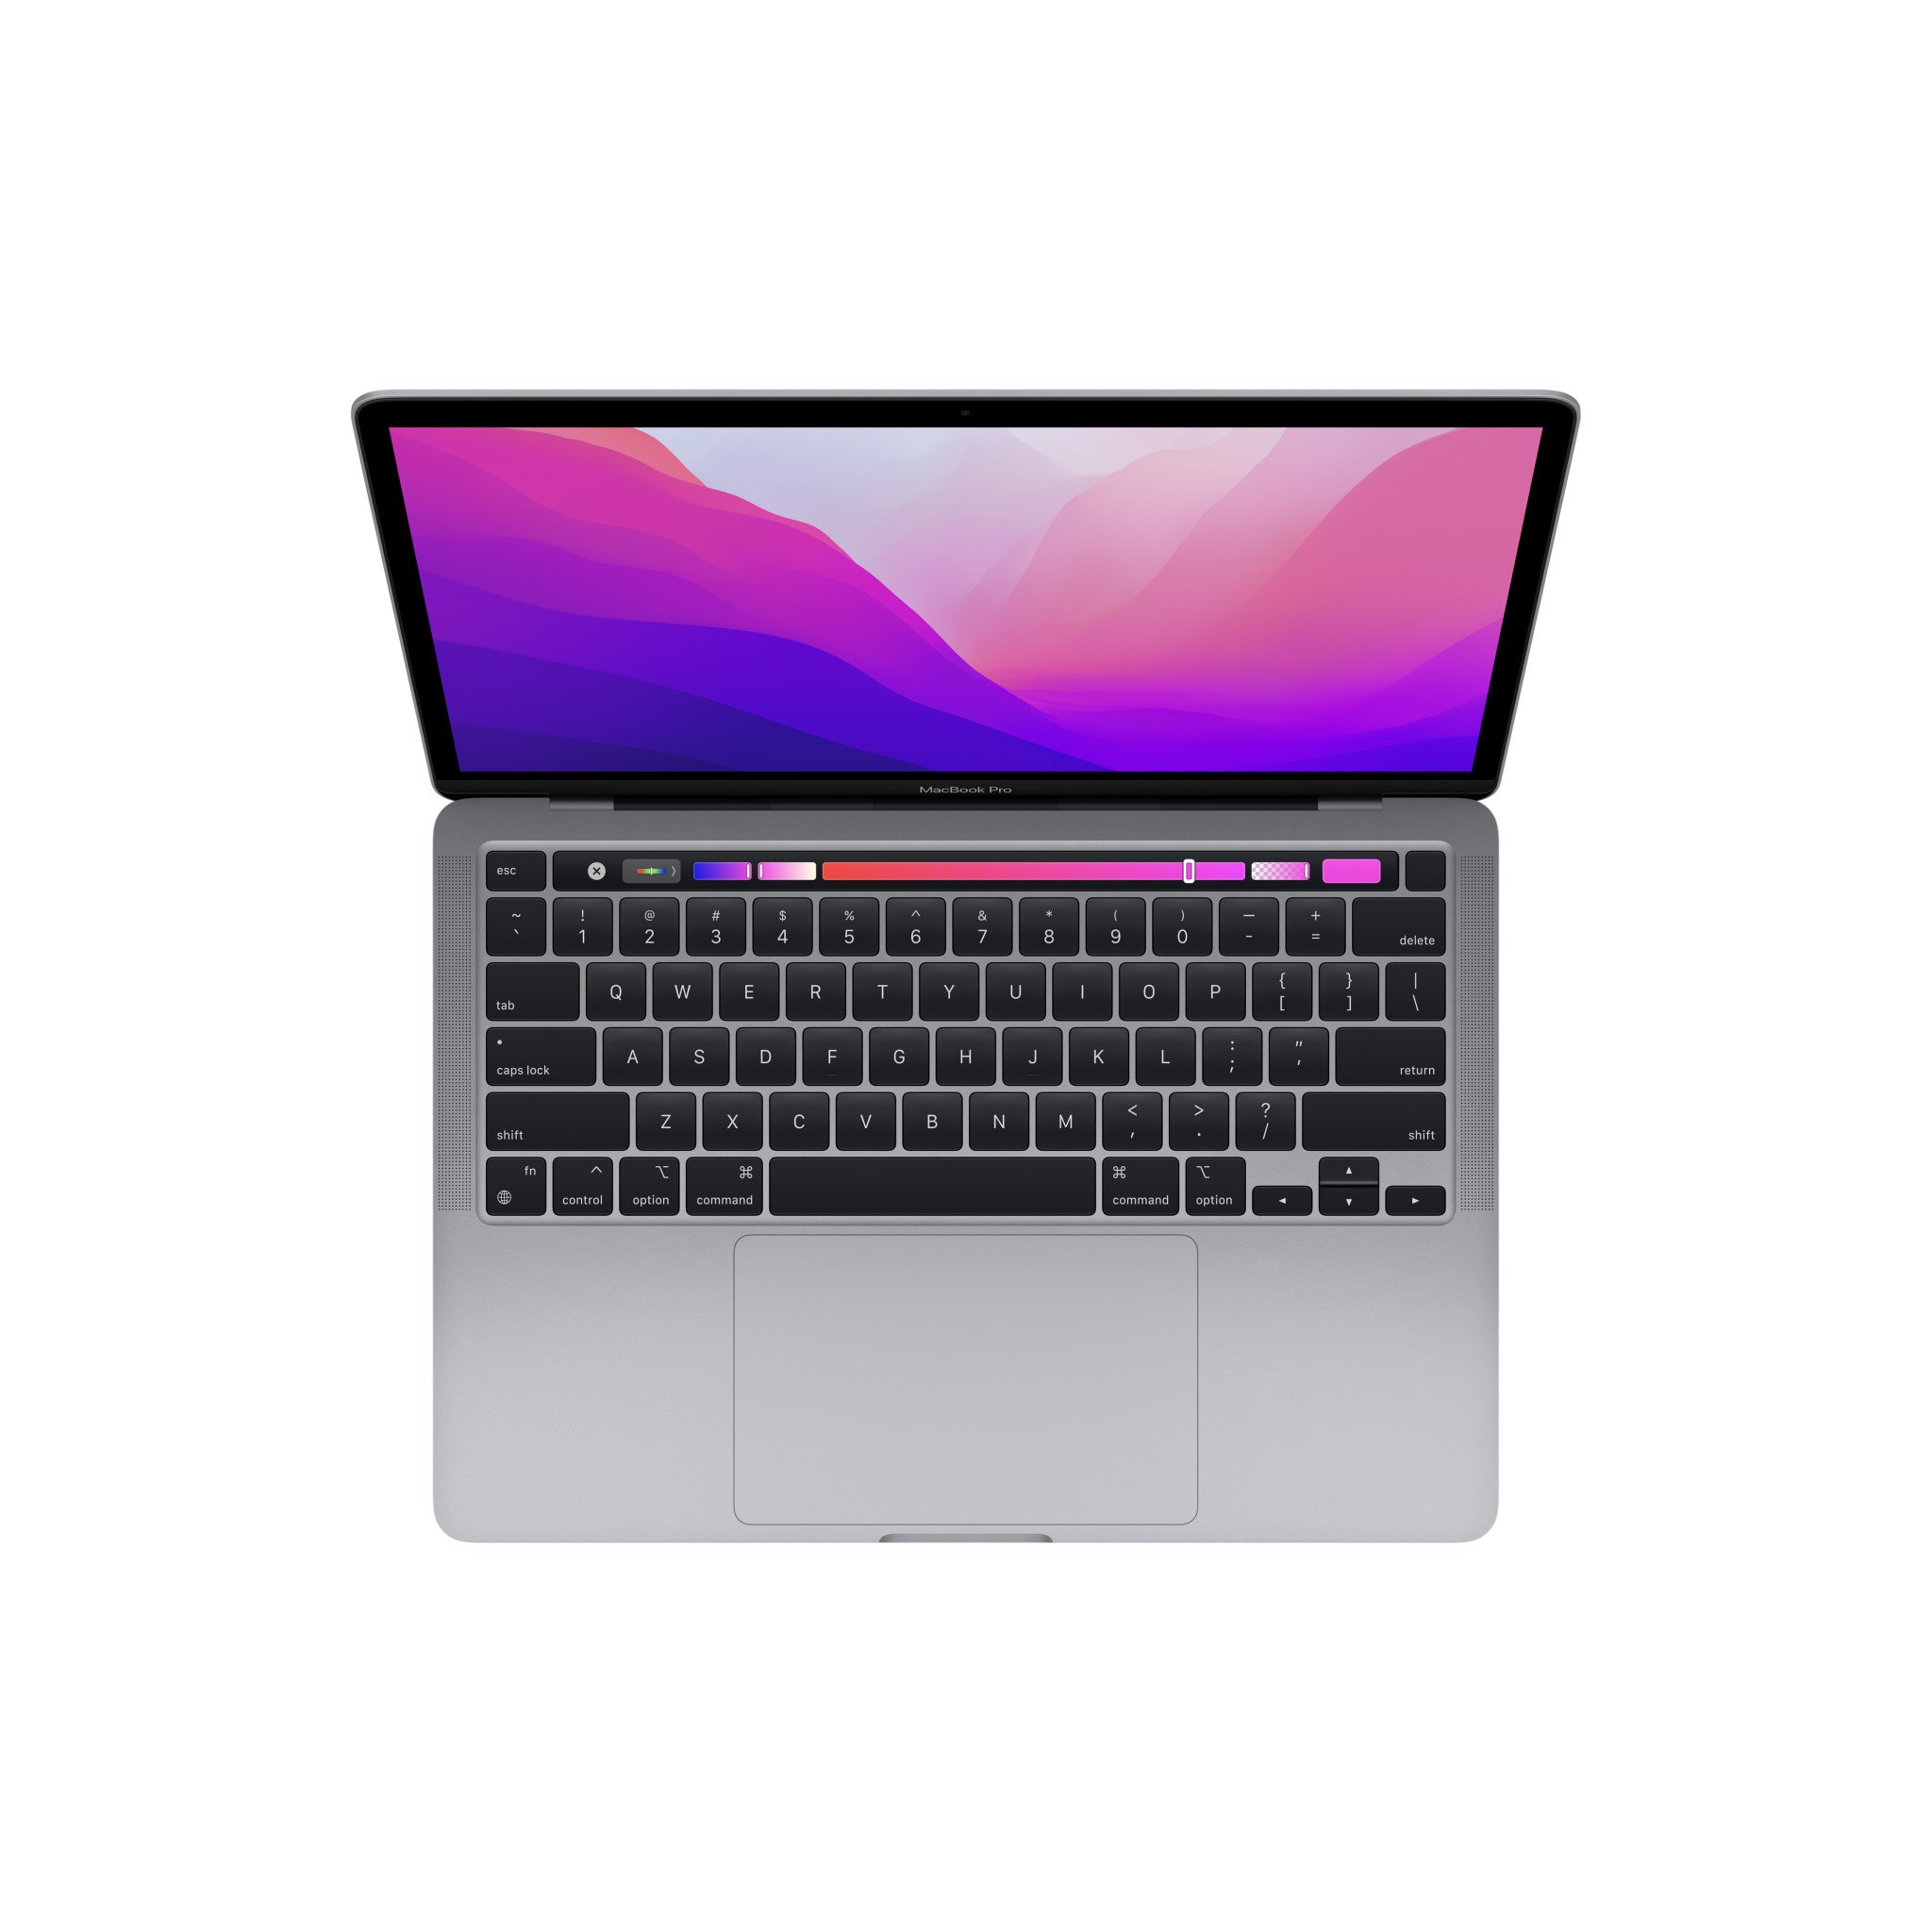 MacBook Pro 13インチ-スペースグレイ